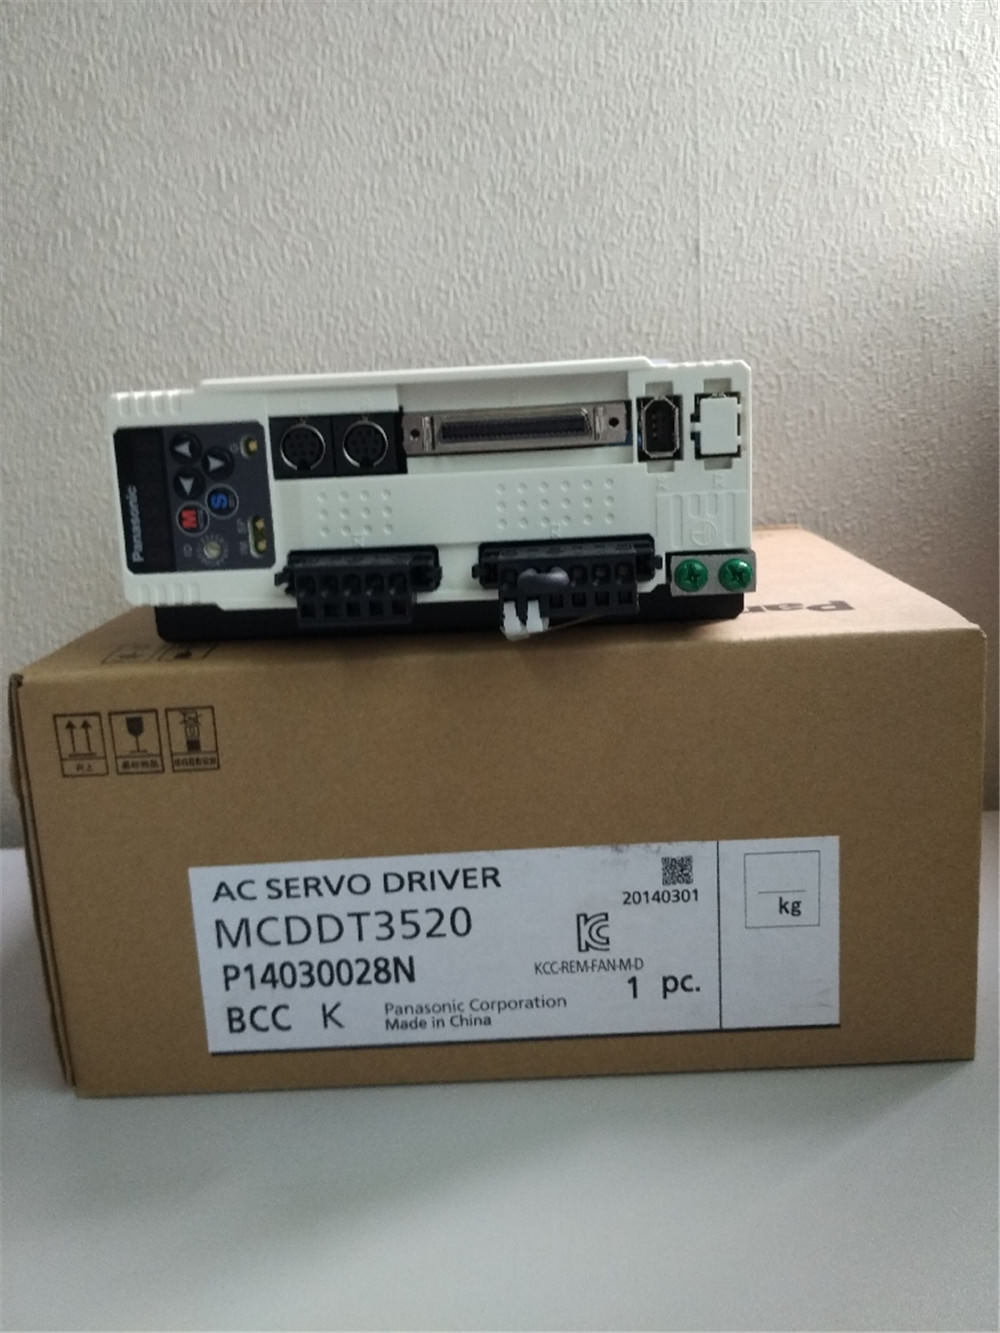 Brand New PANASONIC Servo drive MCDDT3520 in box